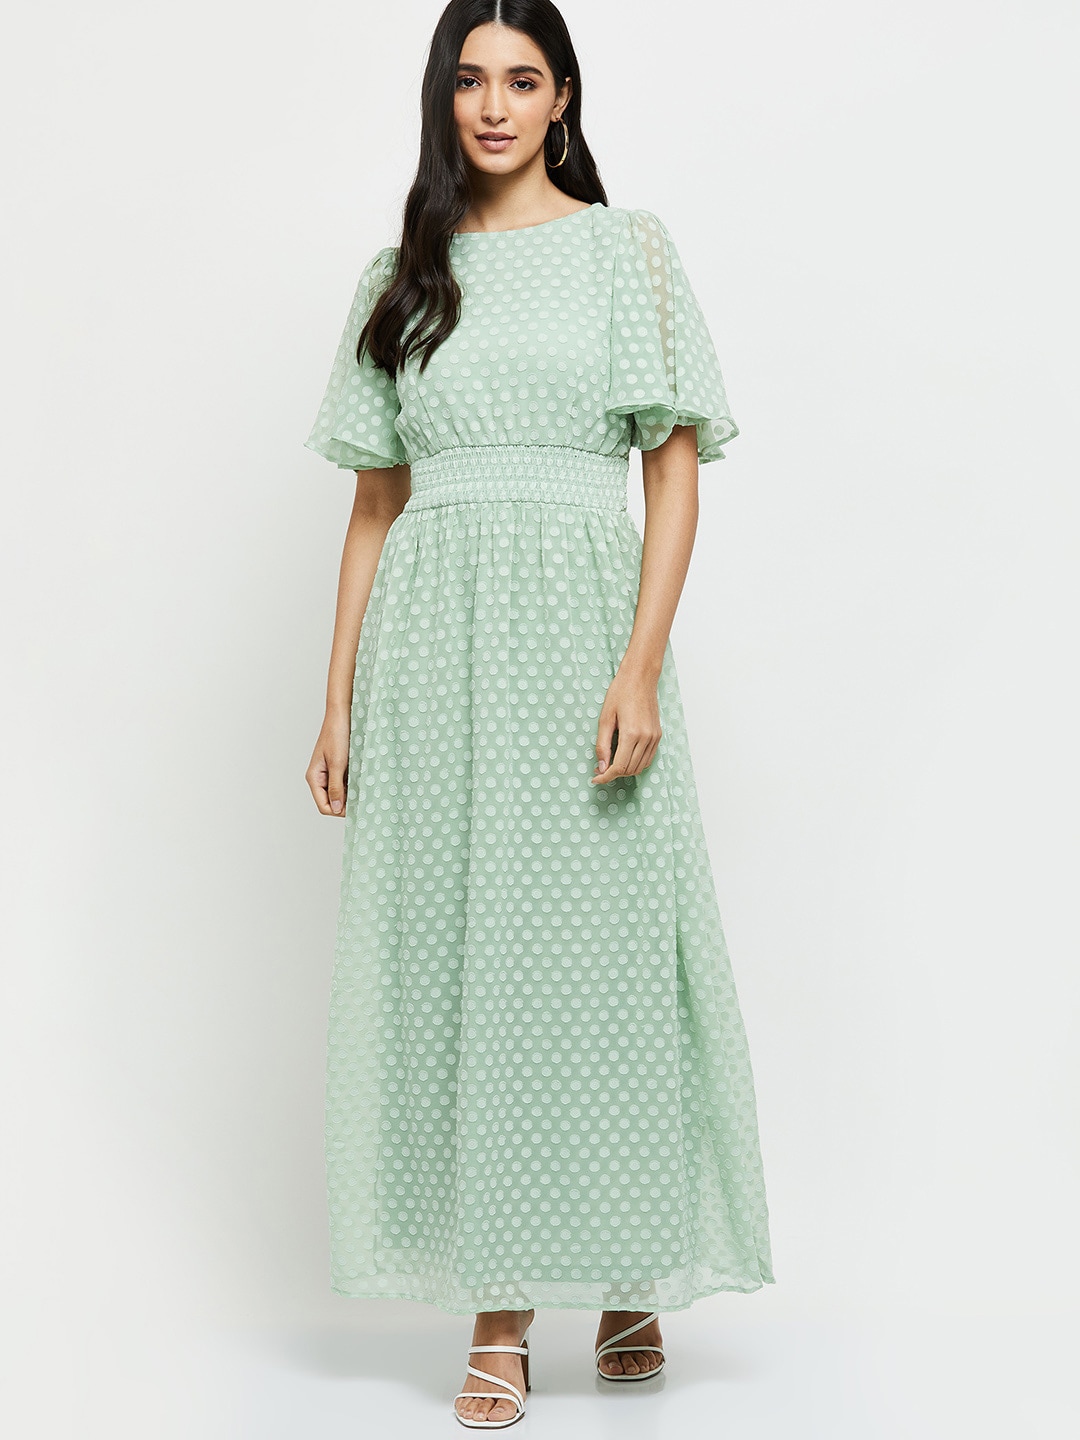 max Sea Green Maxi Dress Price in India